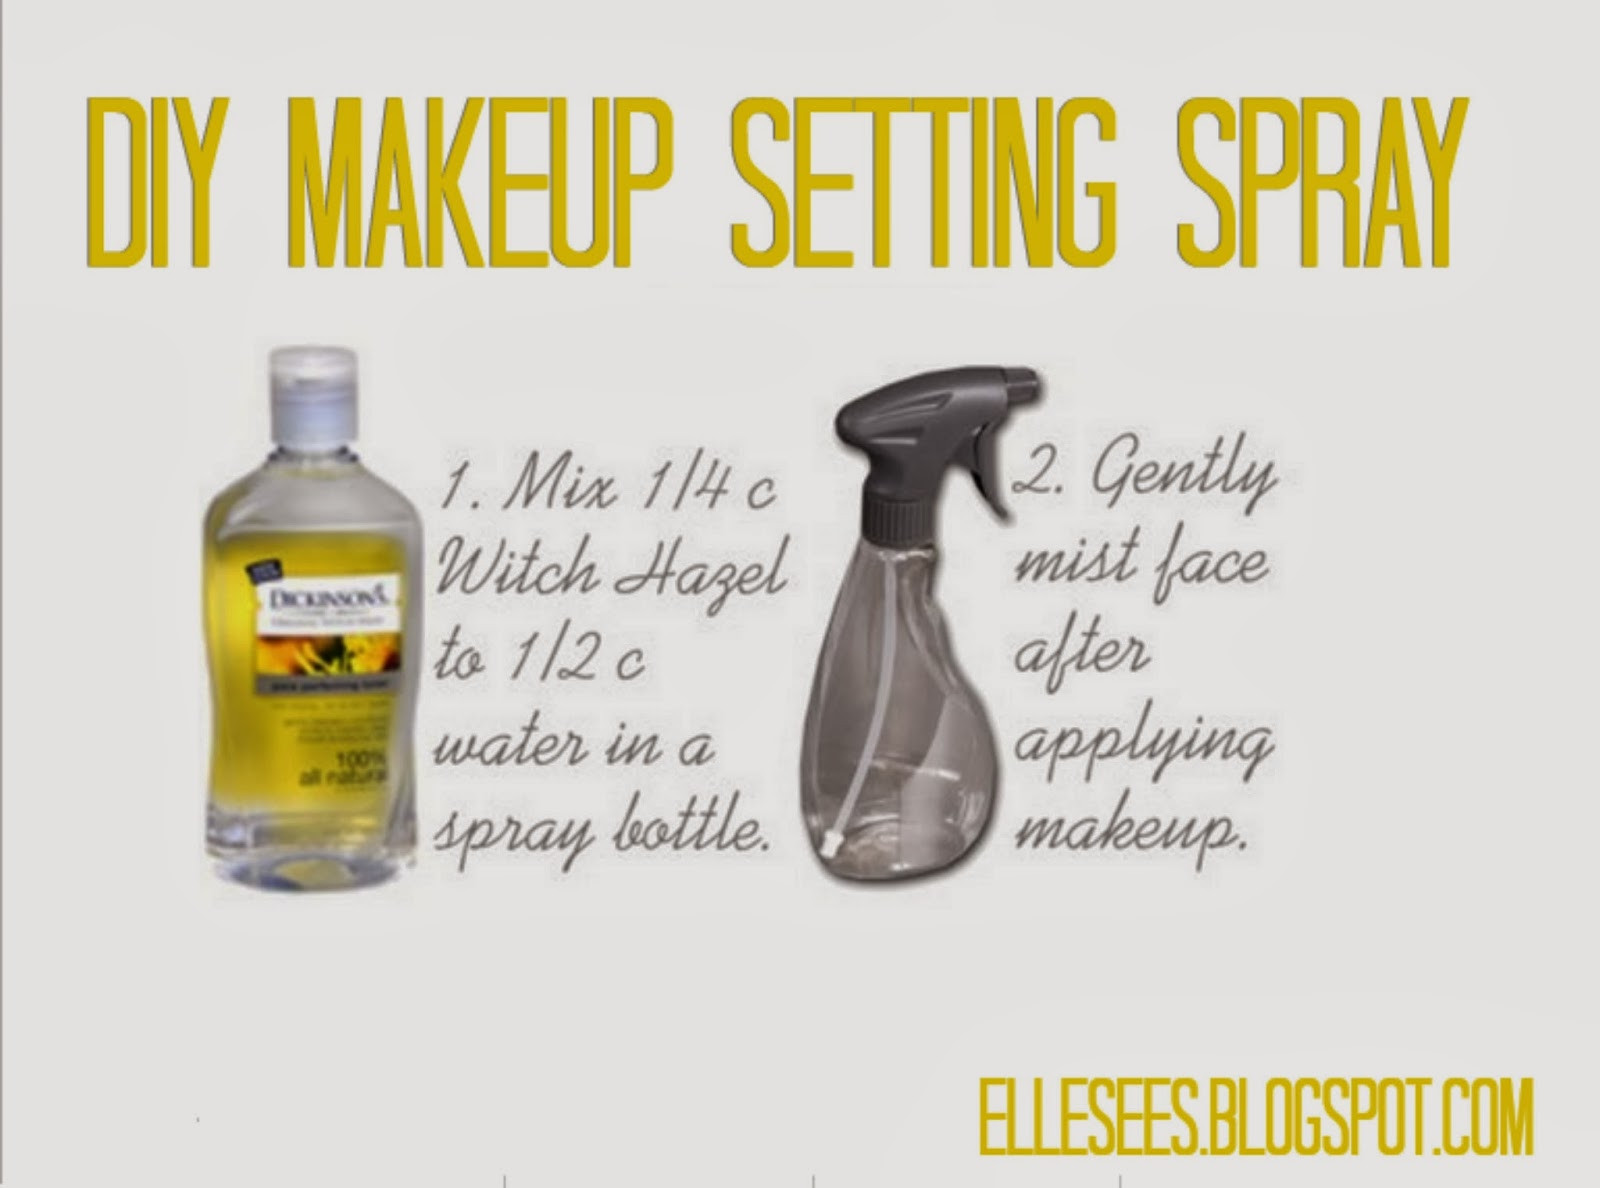 Diy Setting Spray
 Elle Sees Beauty Blogger in Atlanta DIY Makeup Setting